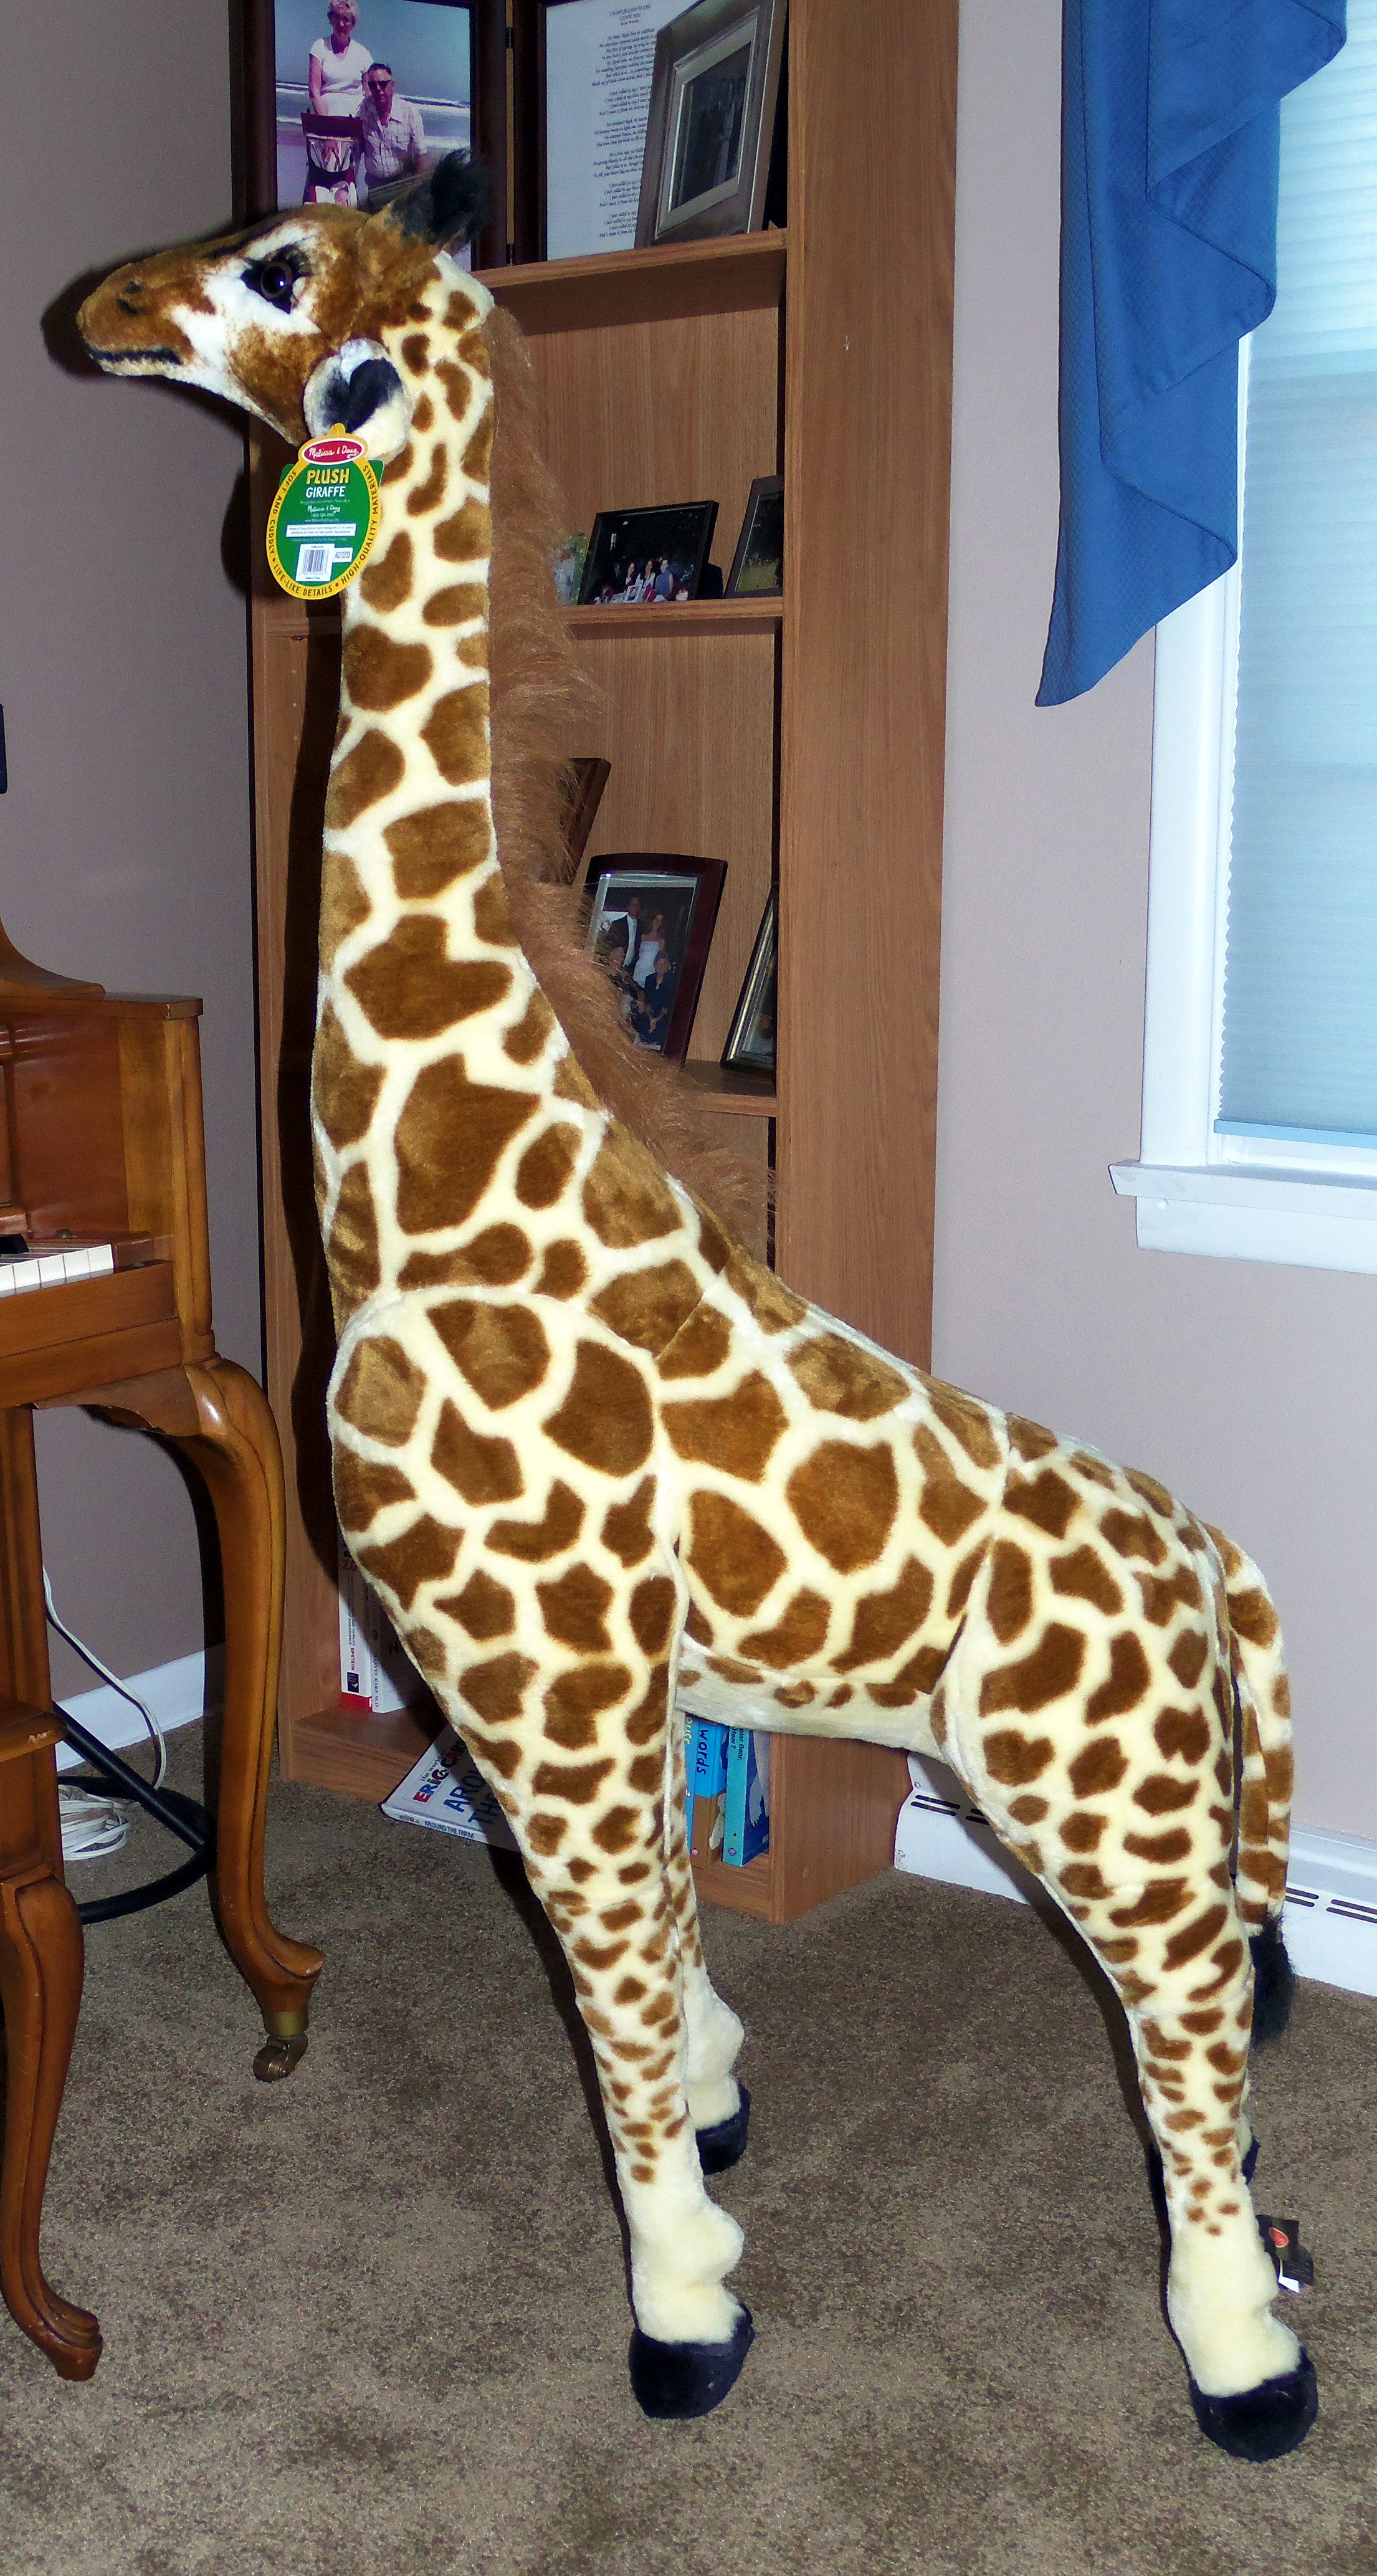 5 foot stuffed giraffe